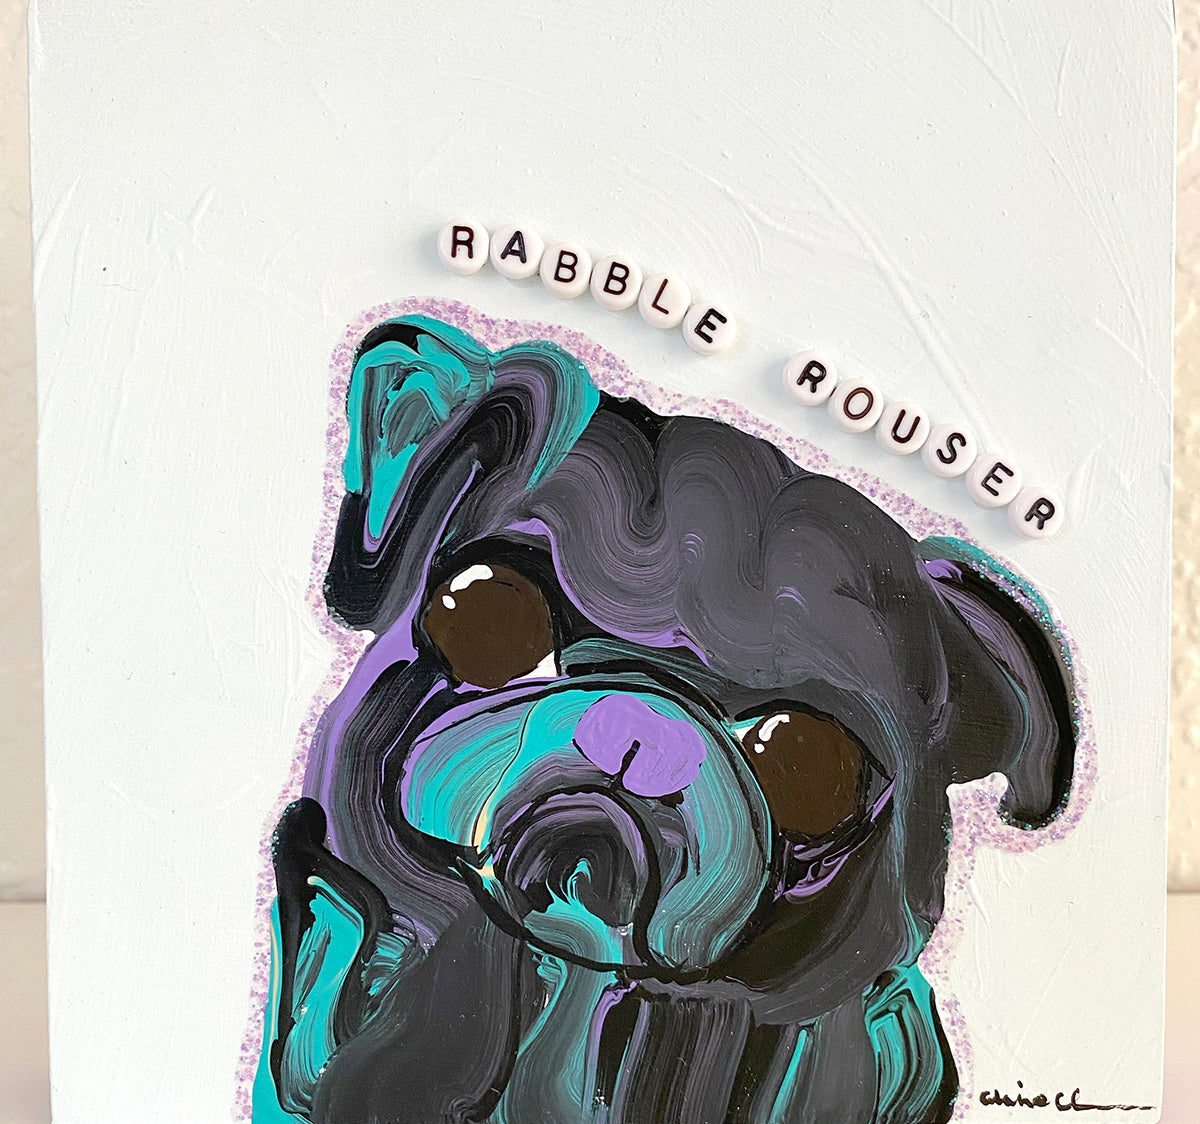 Rabble Rouser - Art Treats #169